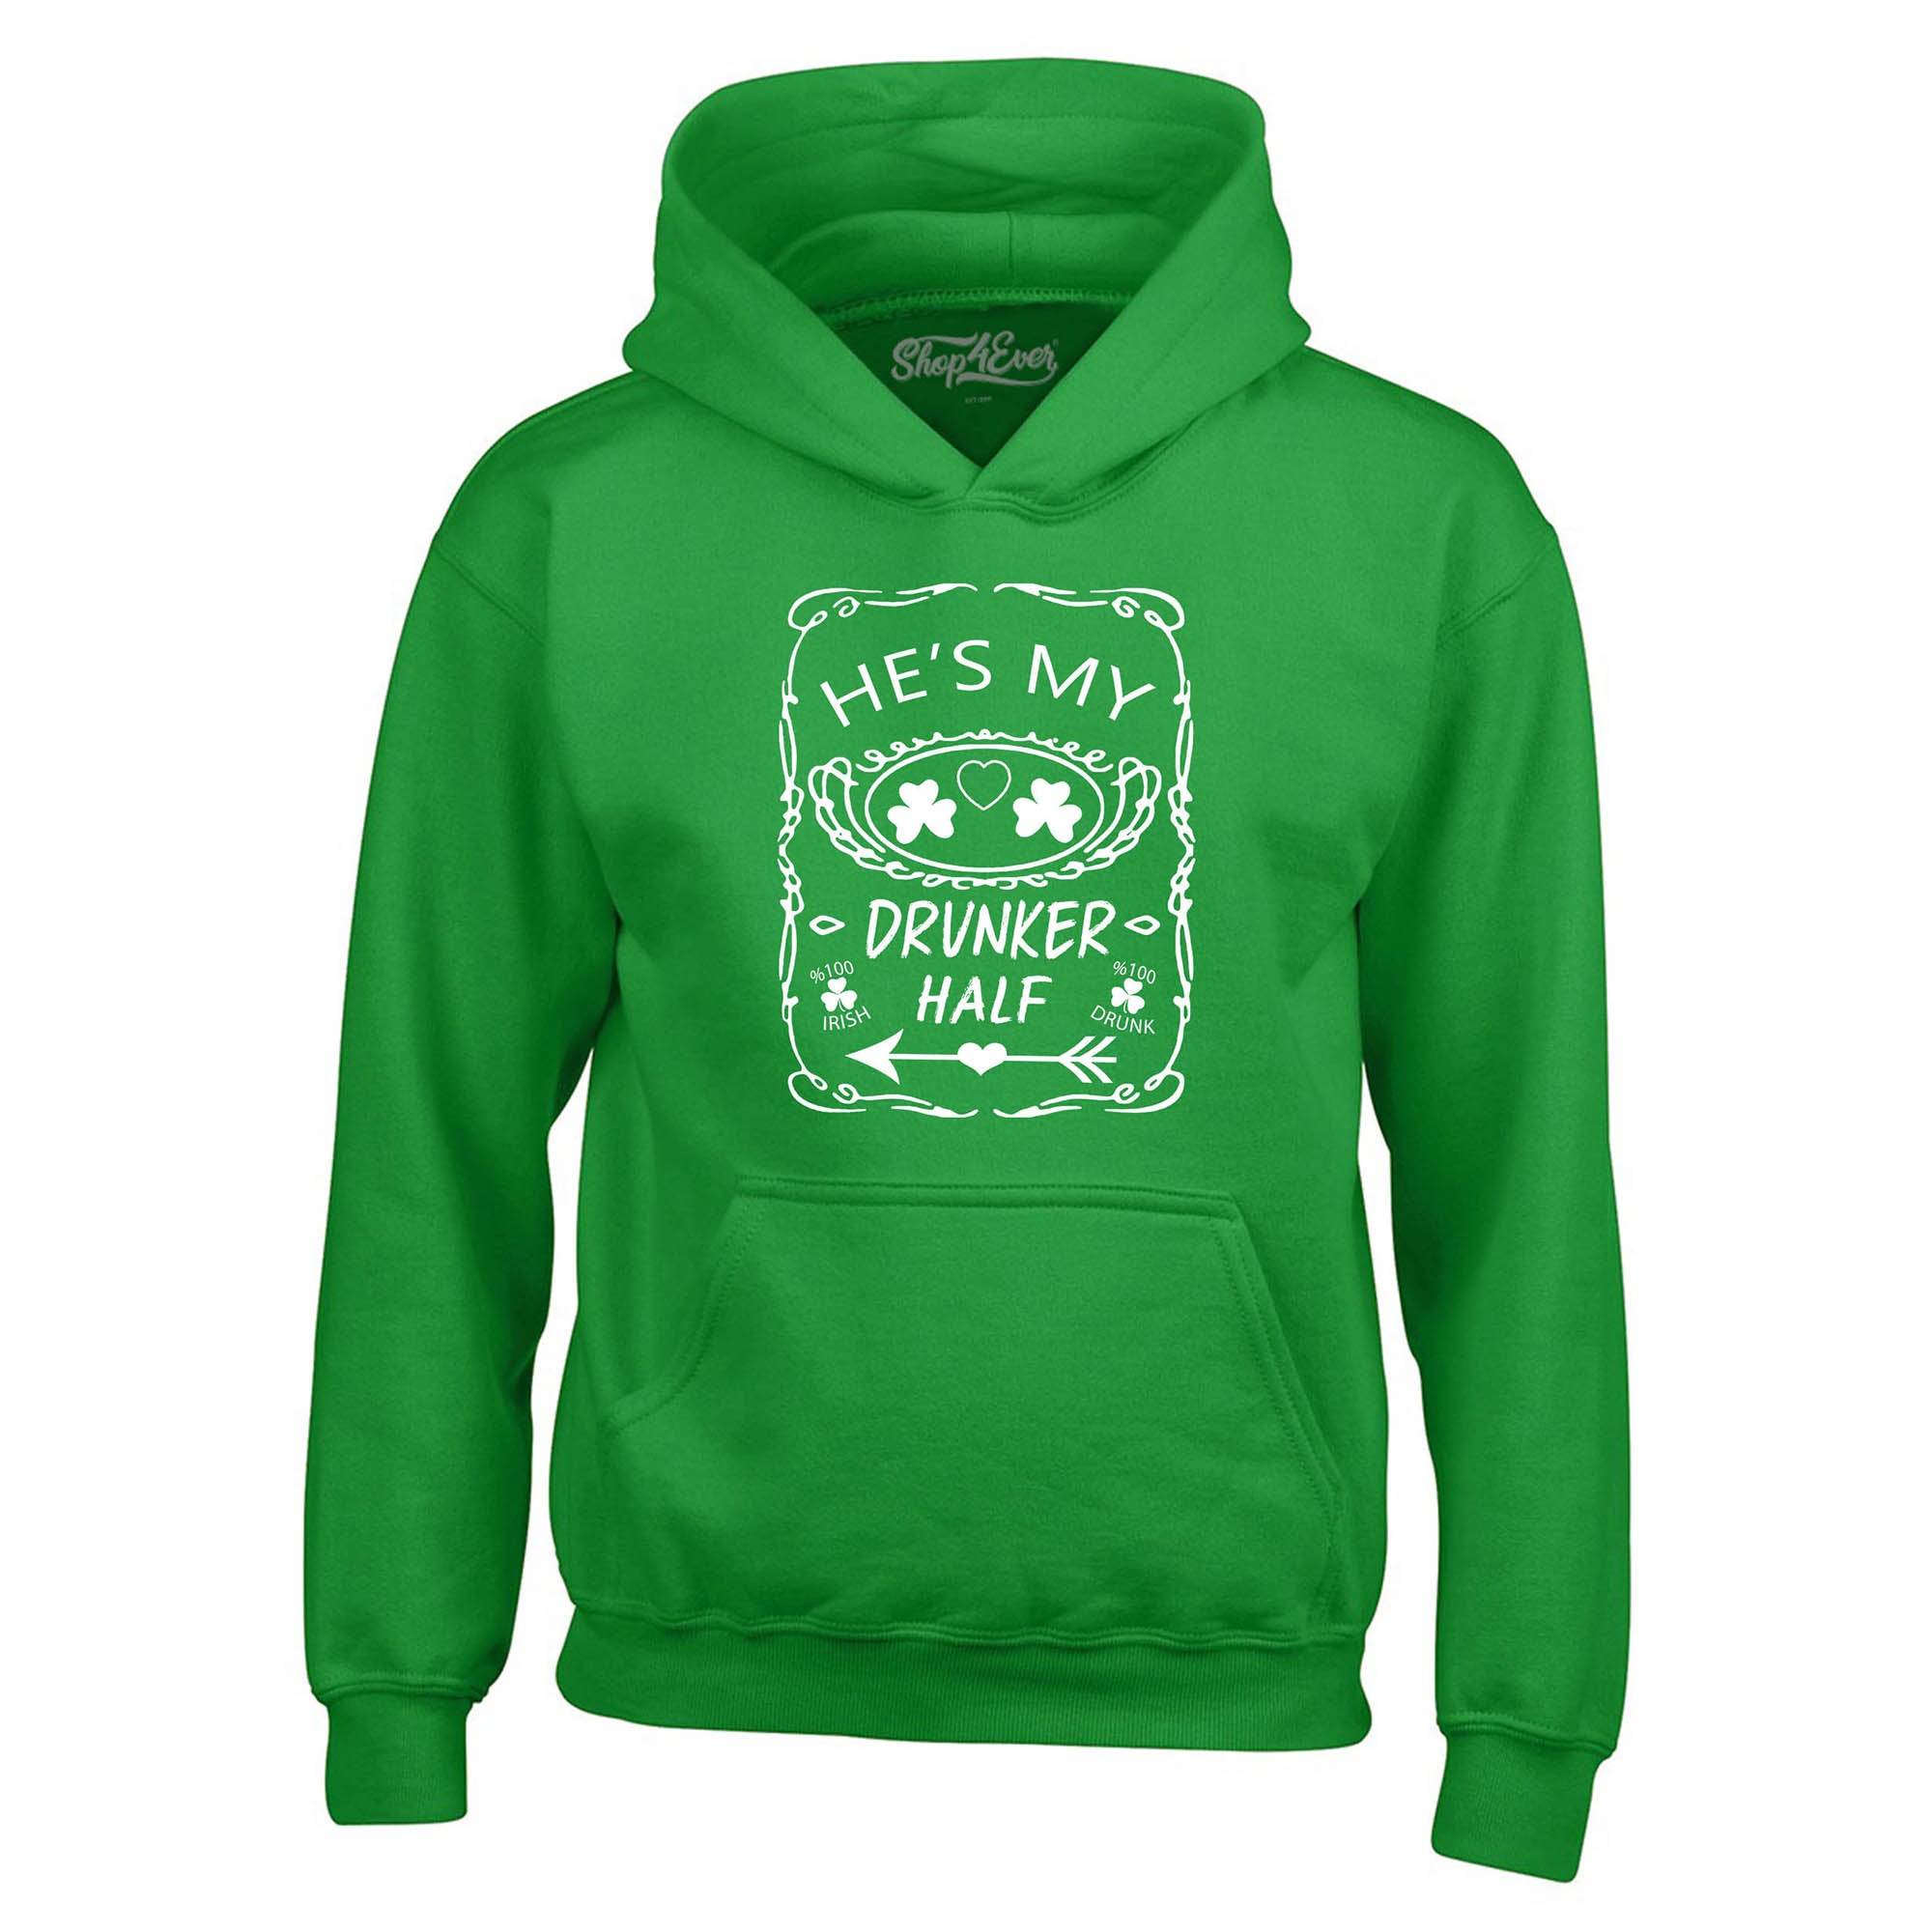 He's My Drunker Half ~ St. Patrick's Day Hoodie Sweatshirts